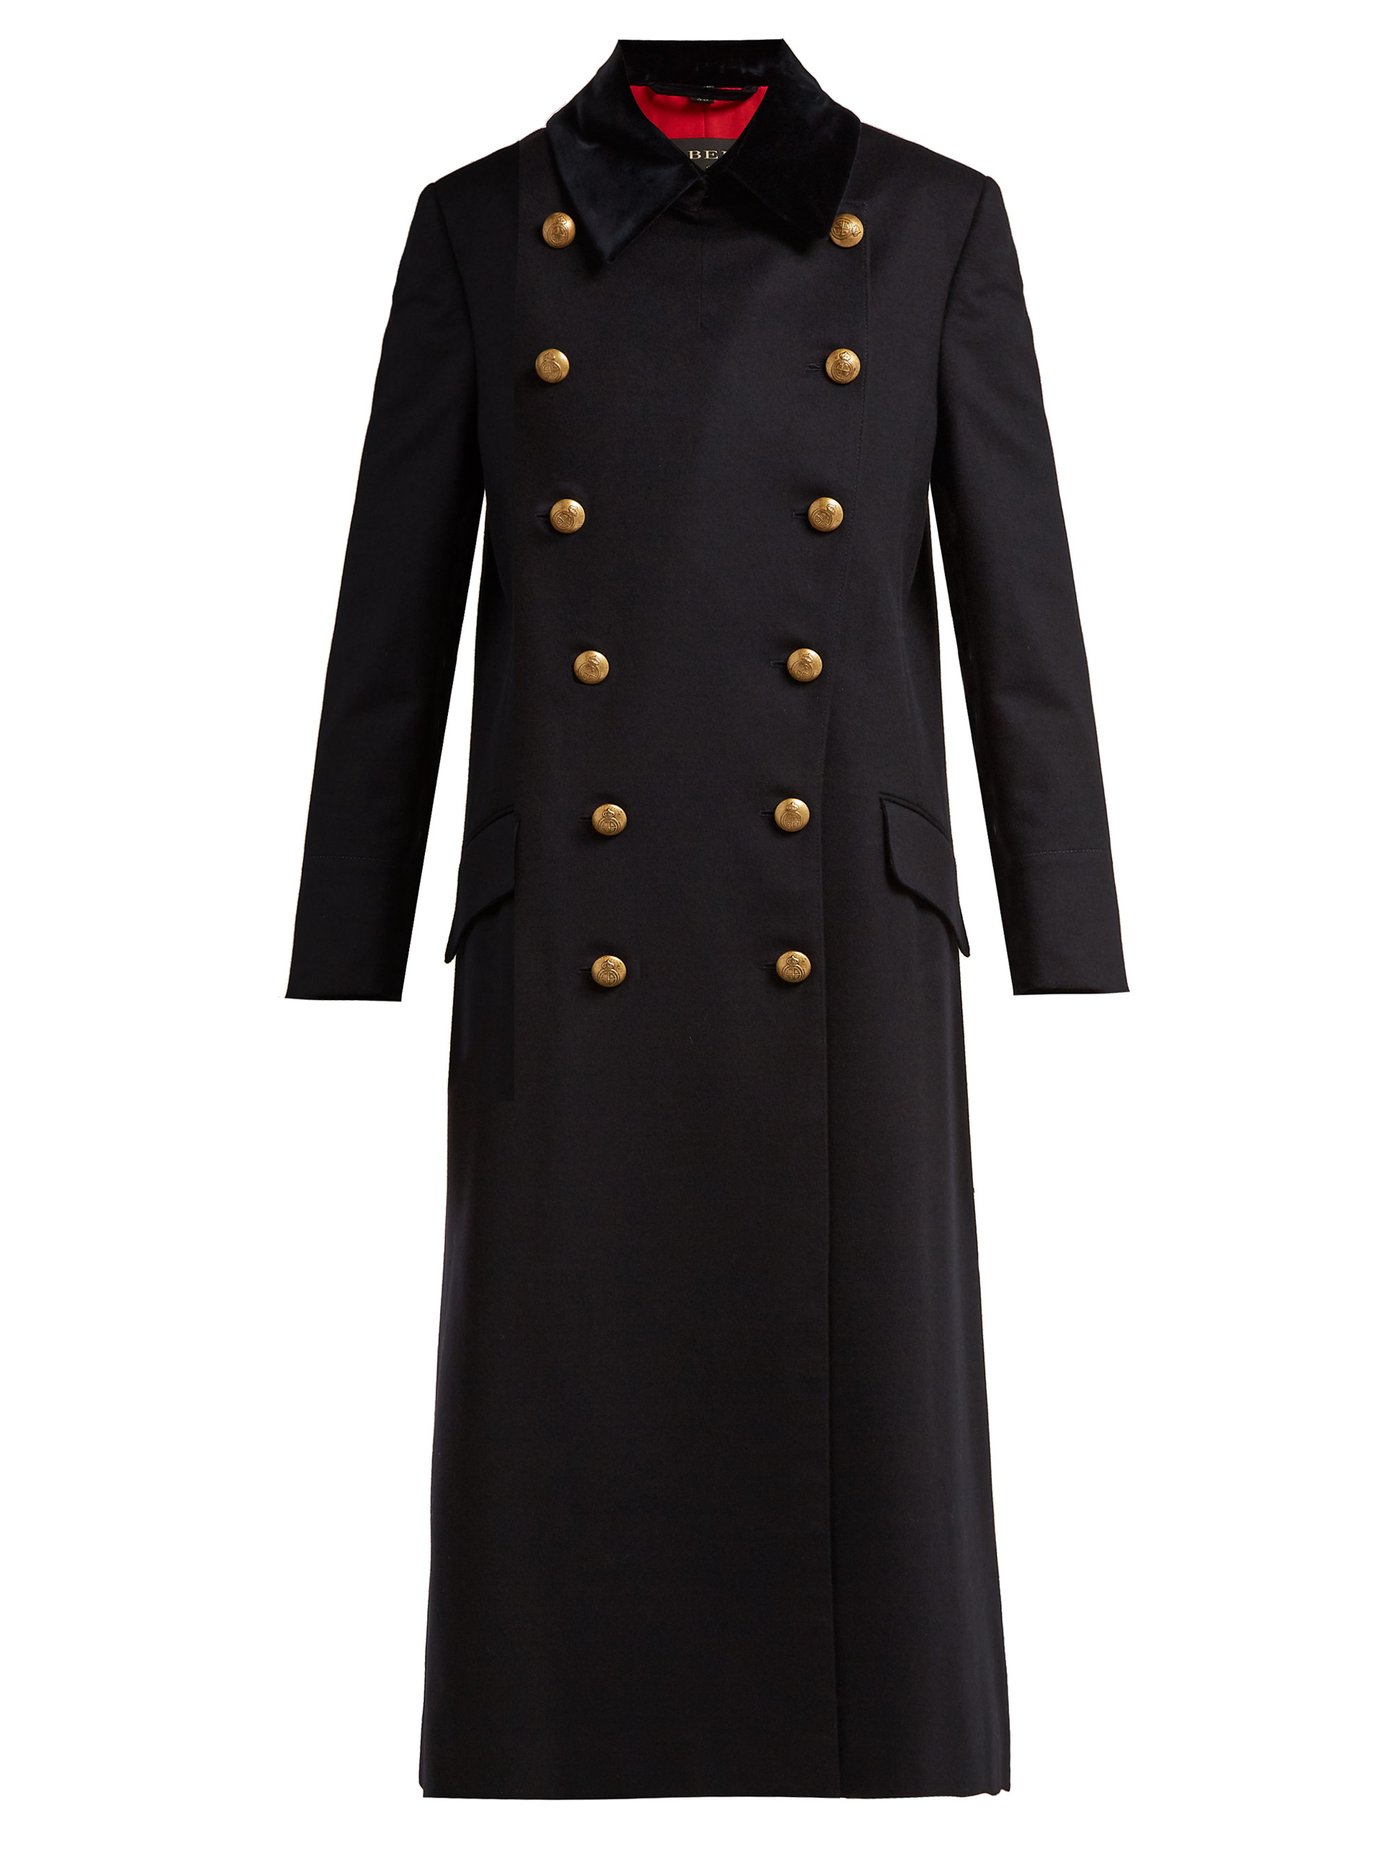 burberry military coat